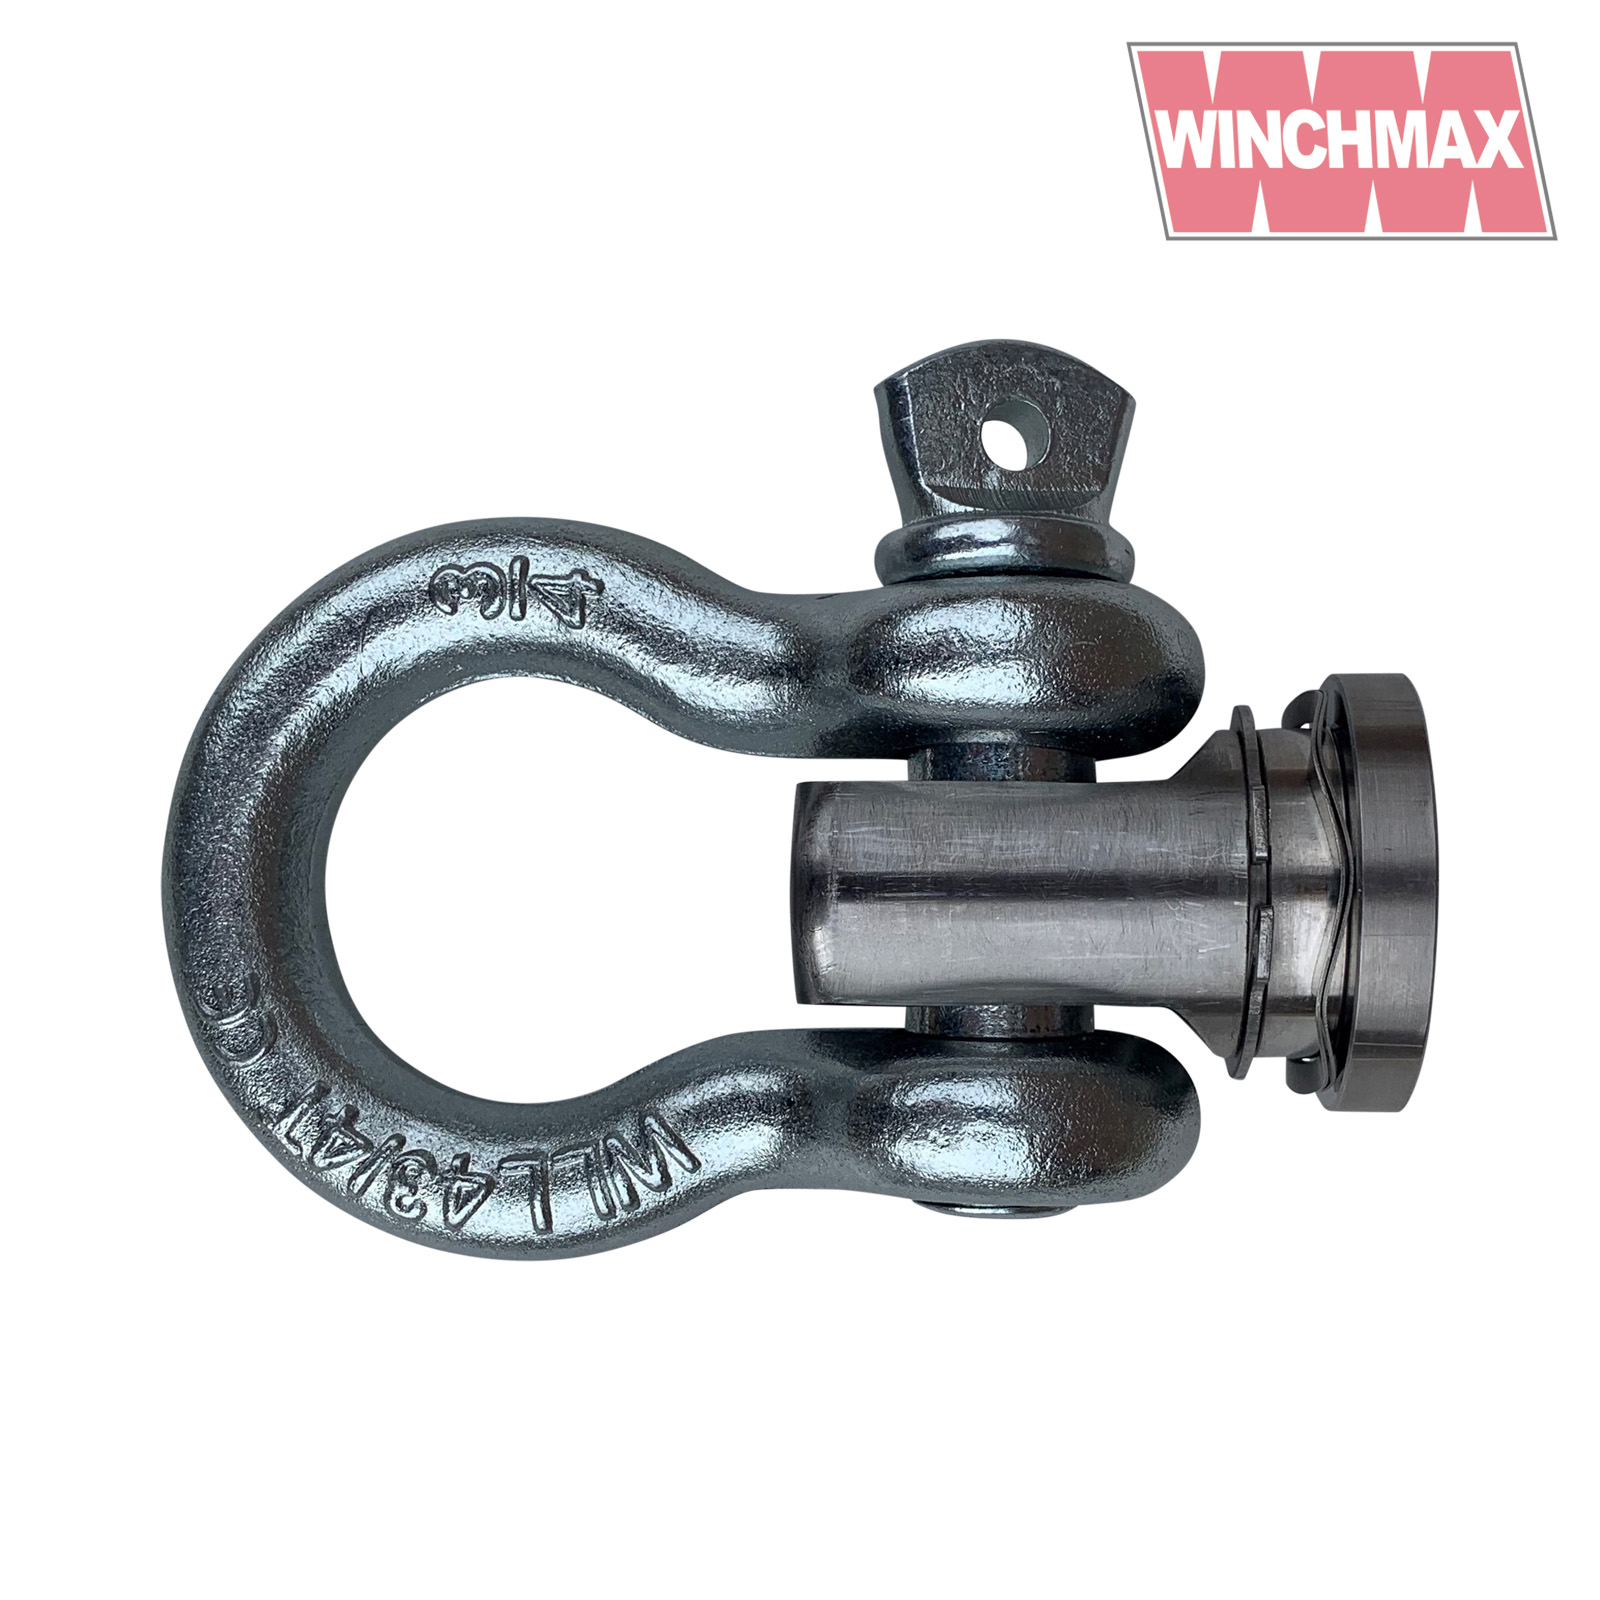 Winchmax 3/4 Inch Swivel Eye for Winch